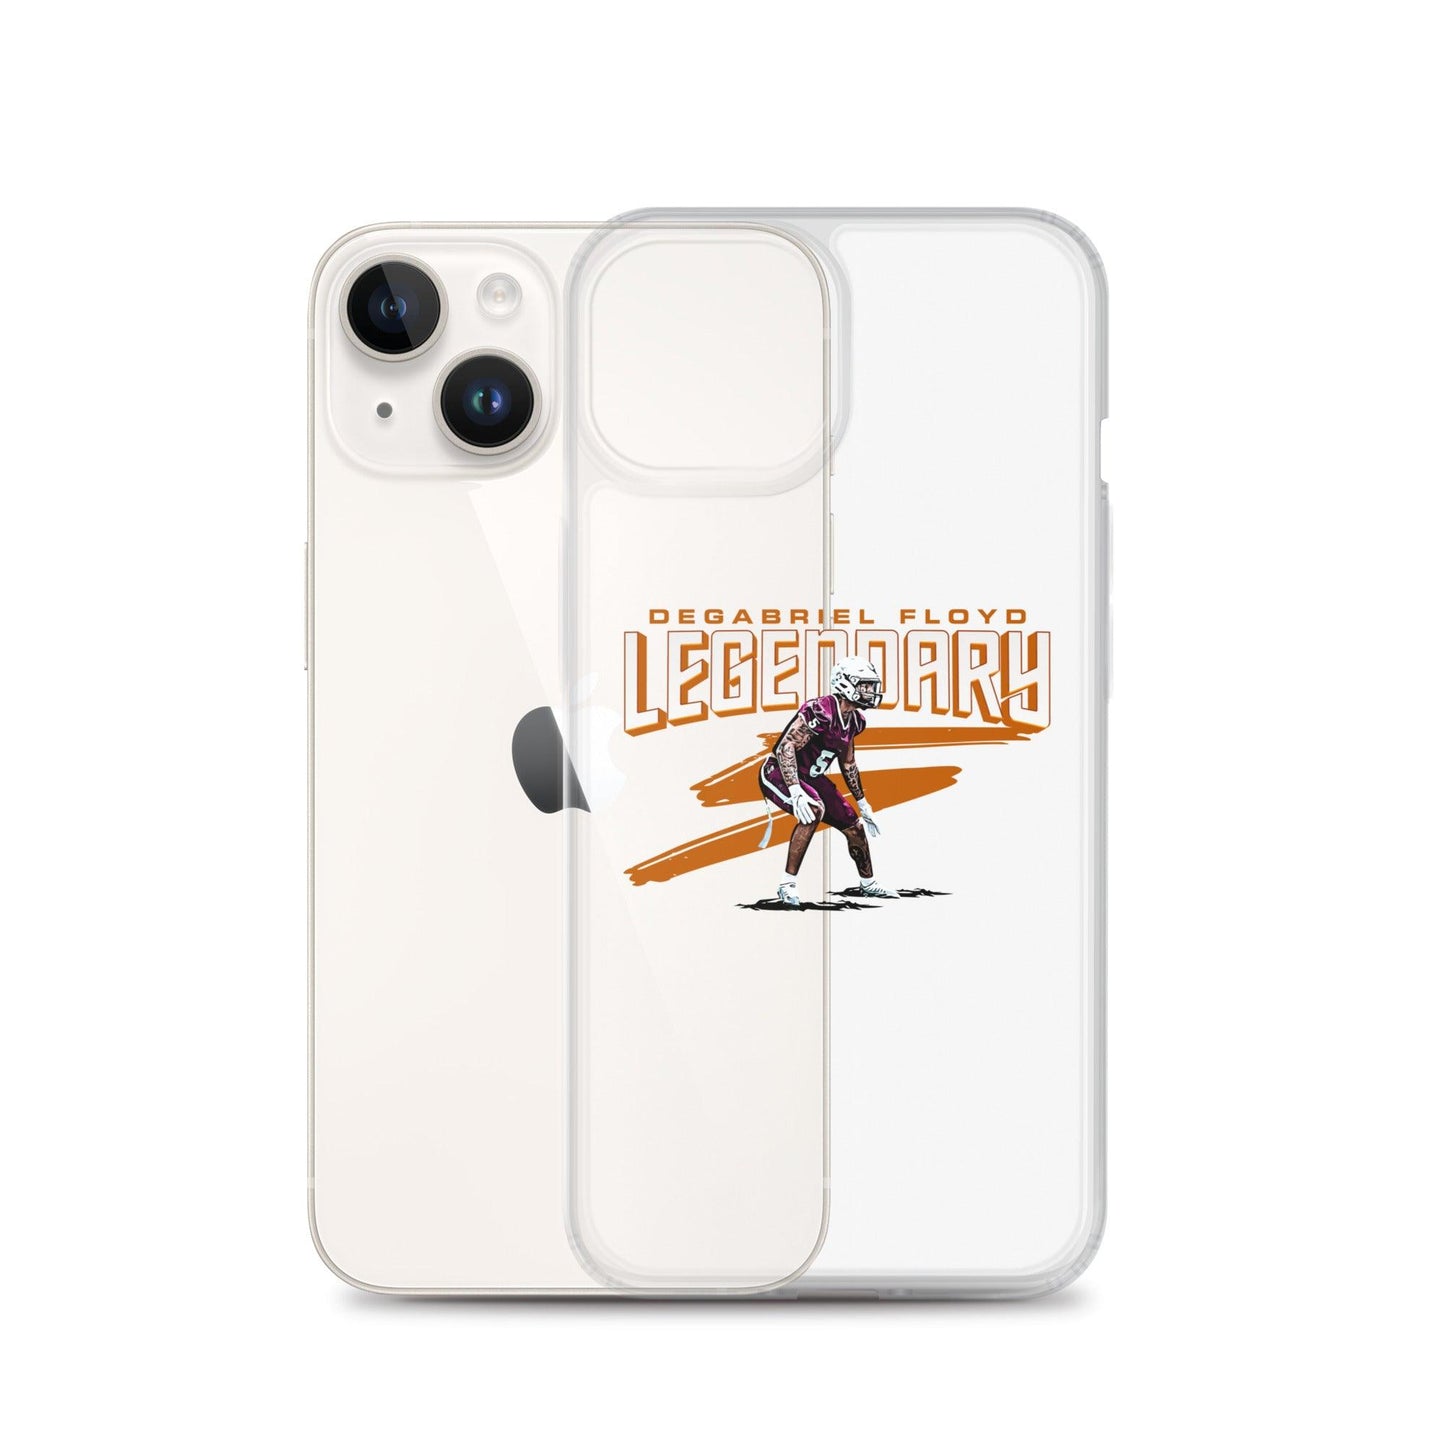 DeGabriel Floyd "Legendary" iPhone Case - Fan Arch